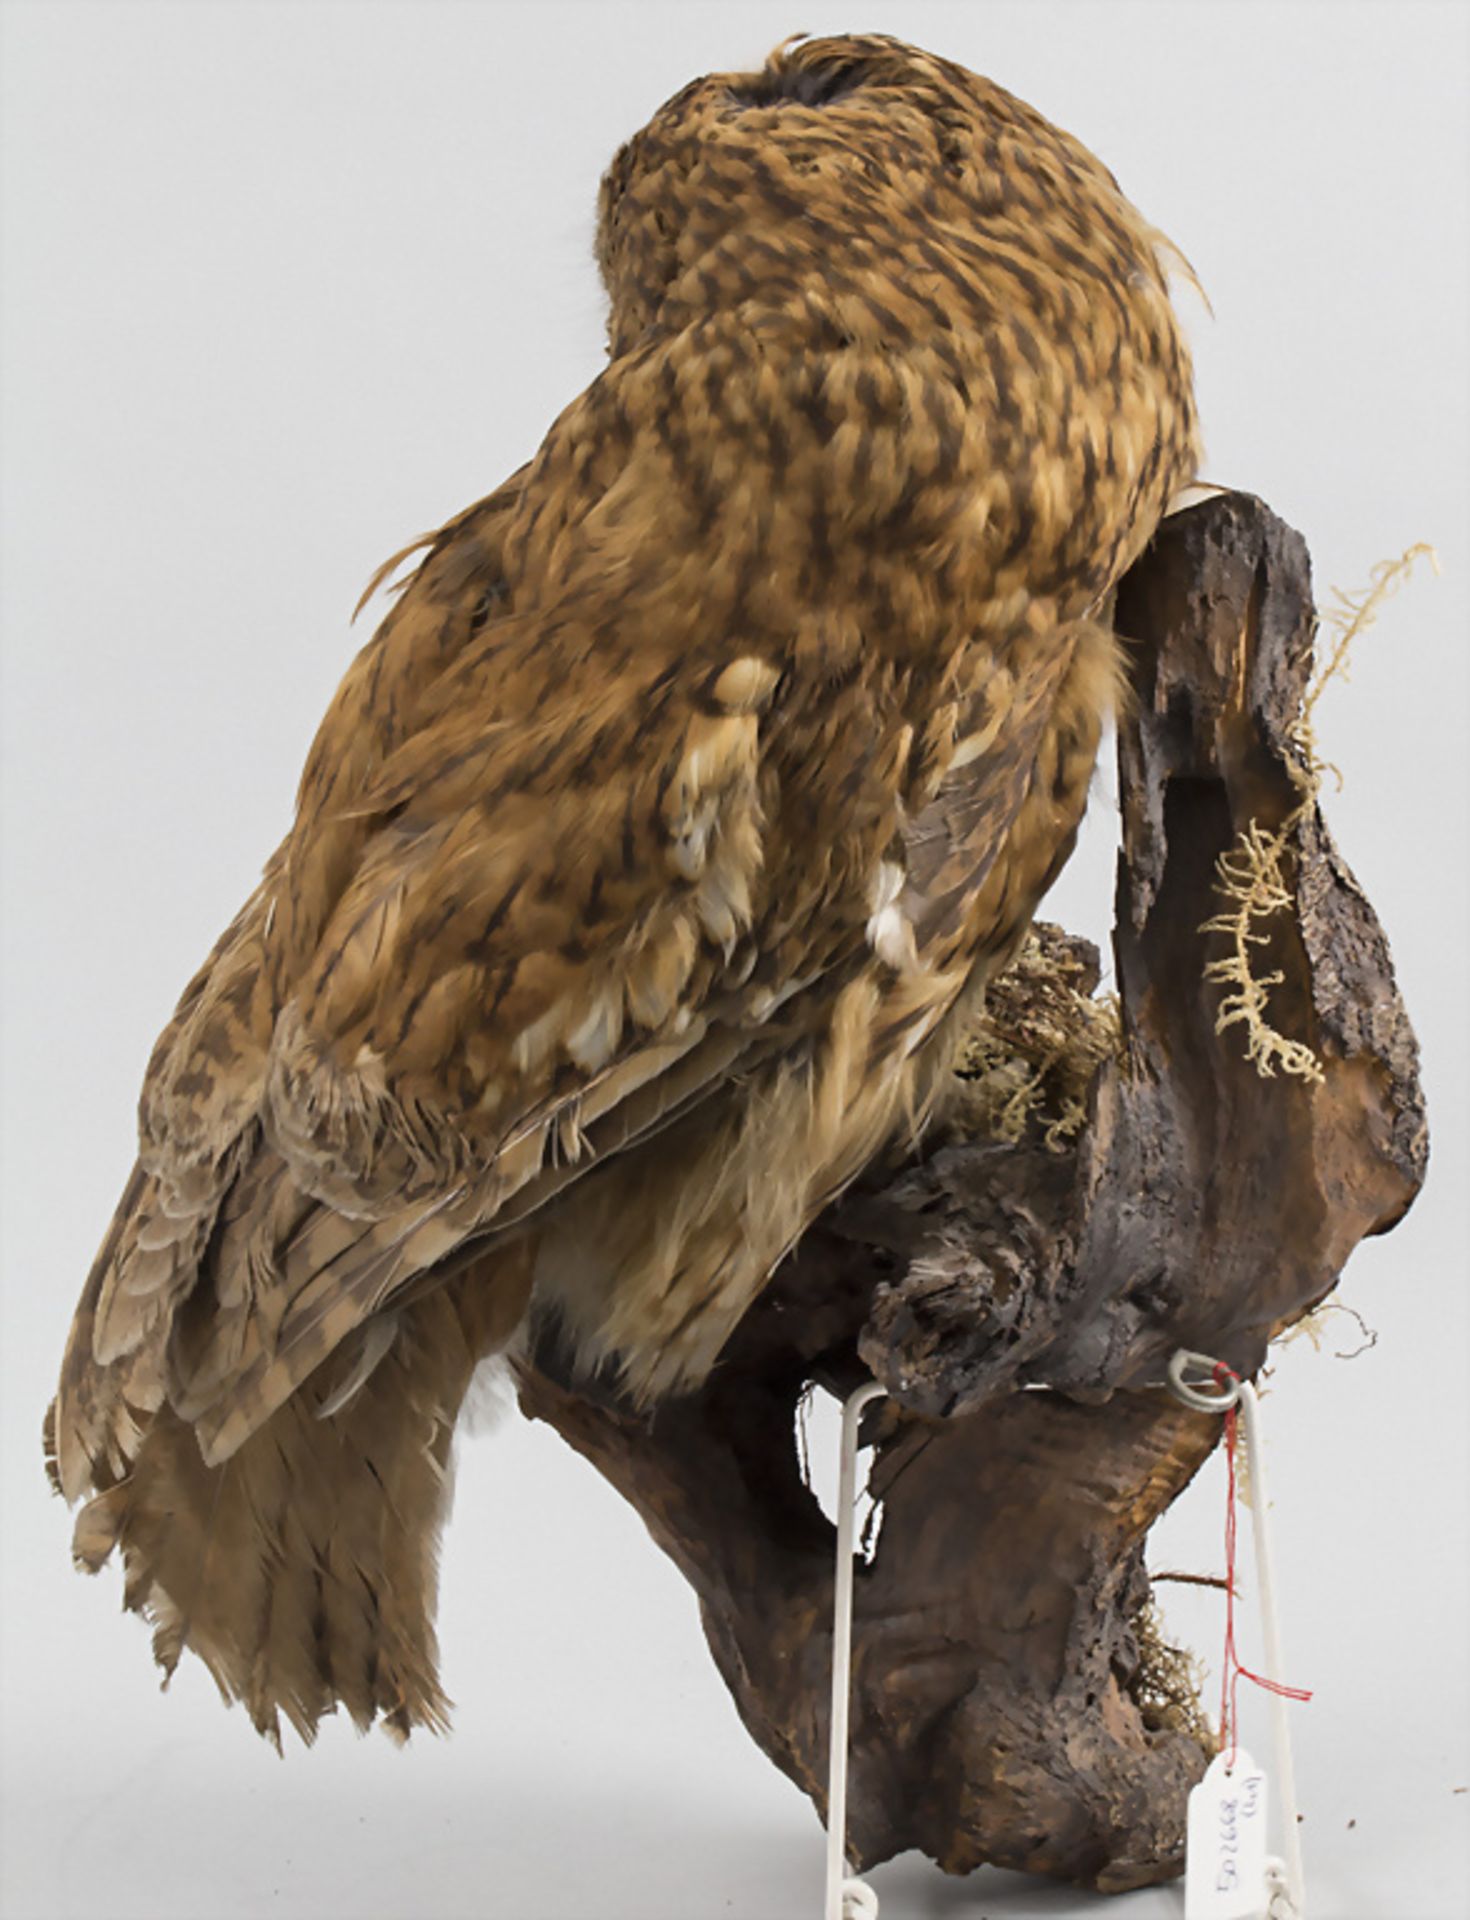 Tierpräparat 'Waldkauz' / An animal preparation 'Tawny owl' - Image 3 of 3